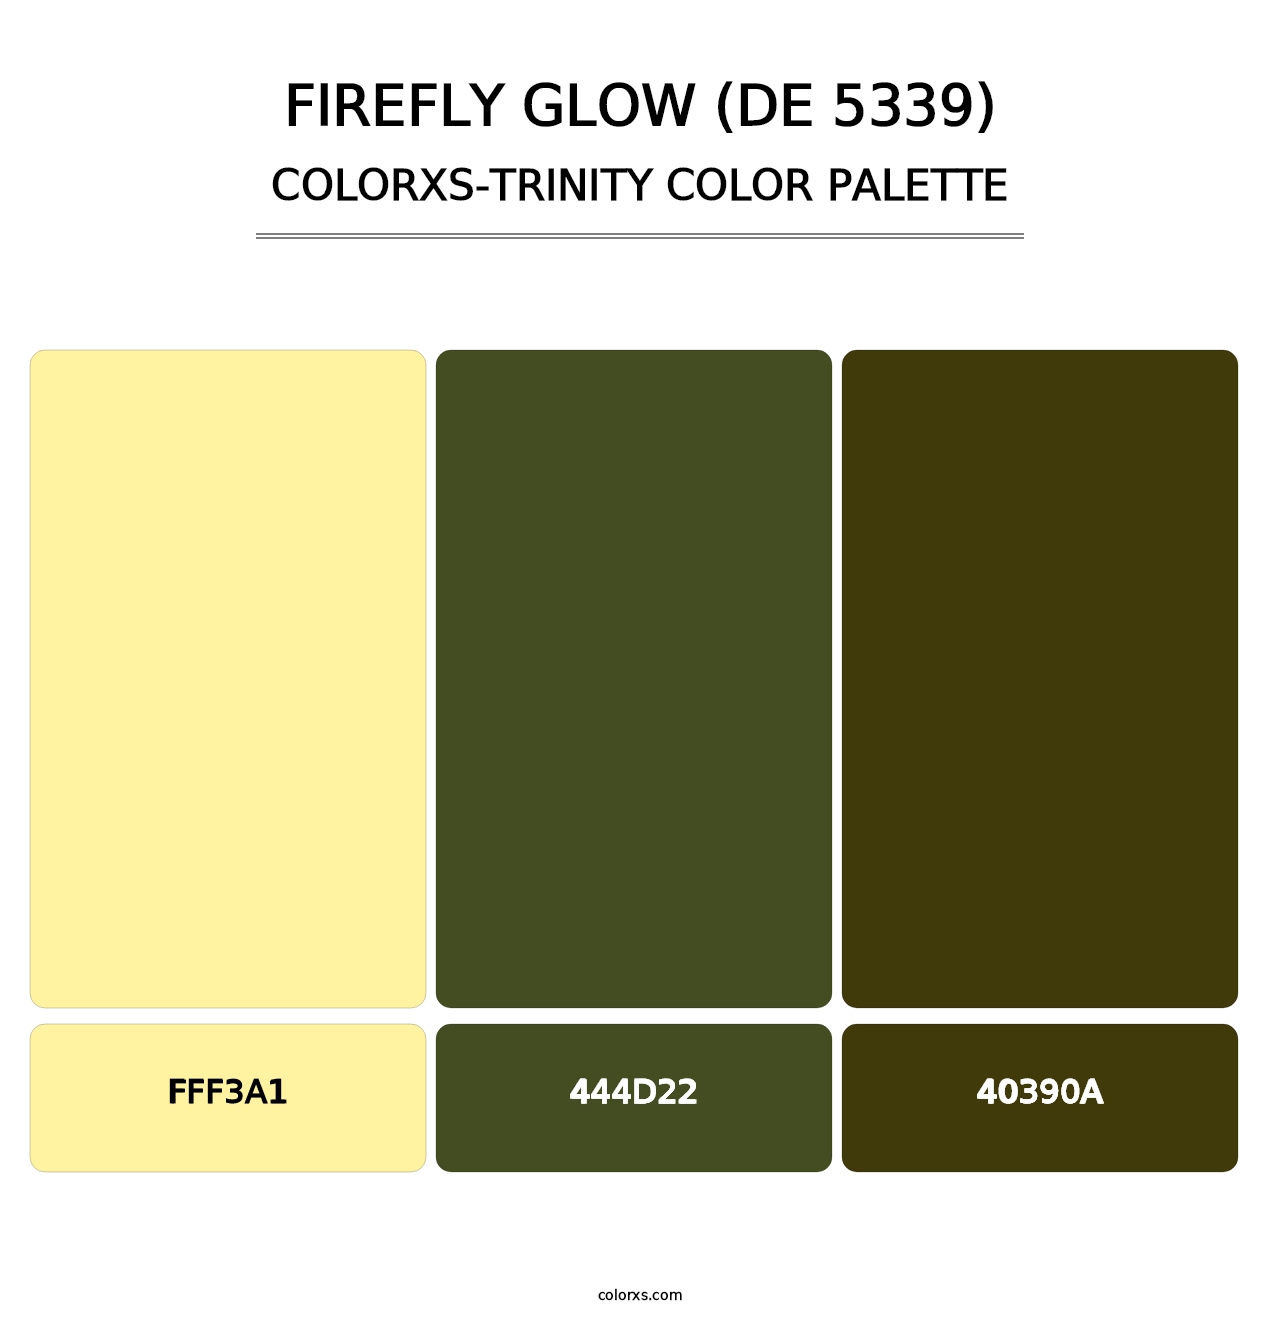 Firefly Glow (DE 5339) - Colorxs Trinity Palette